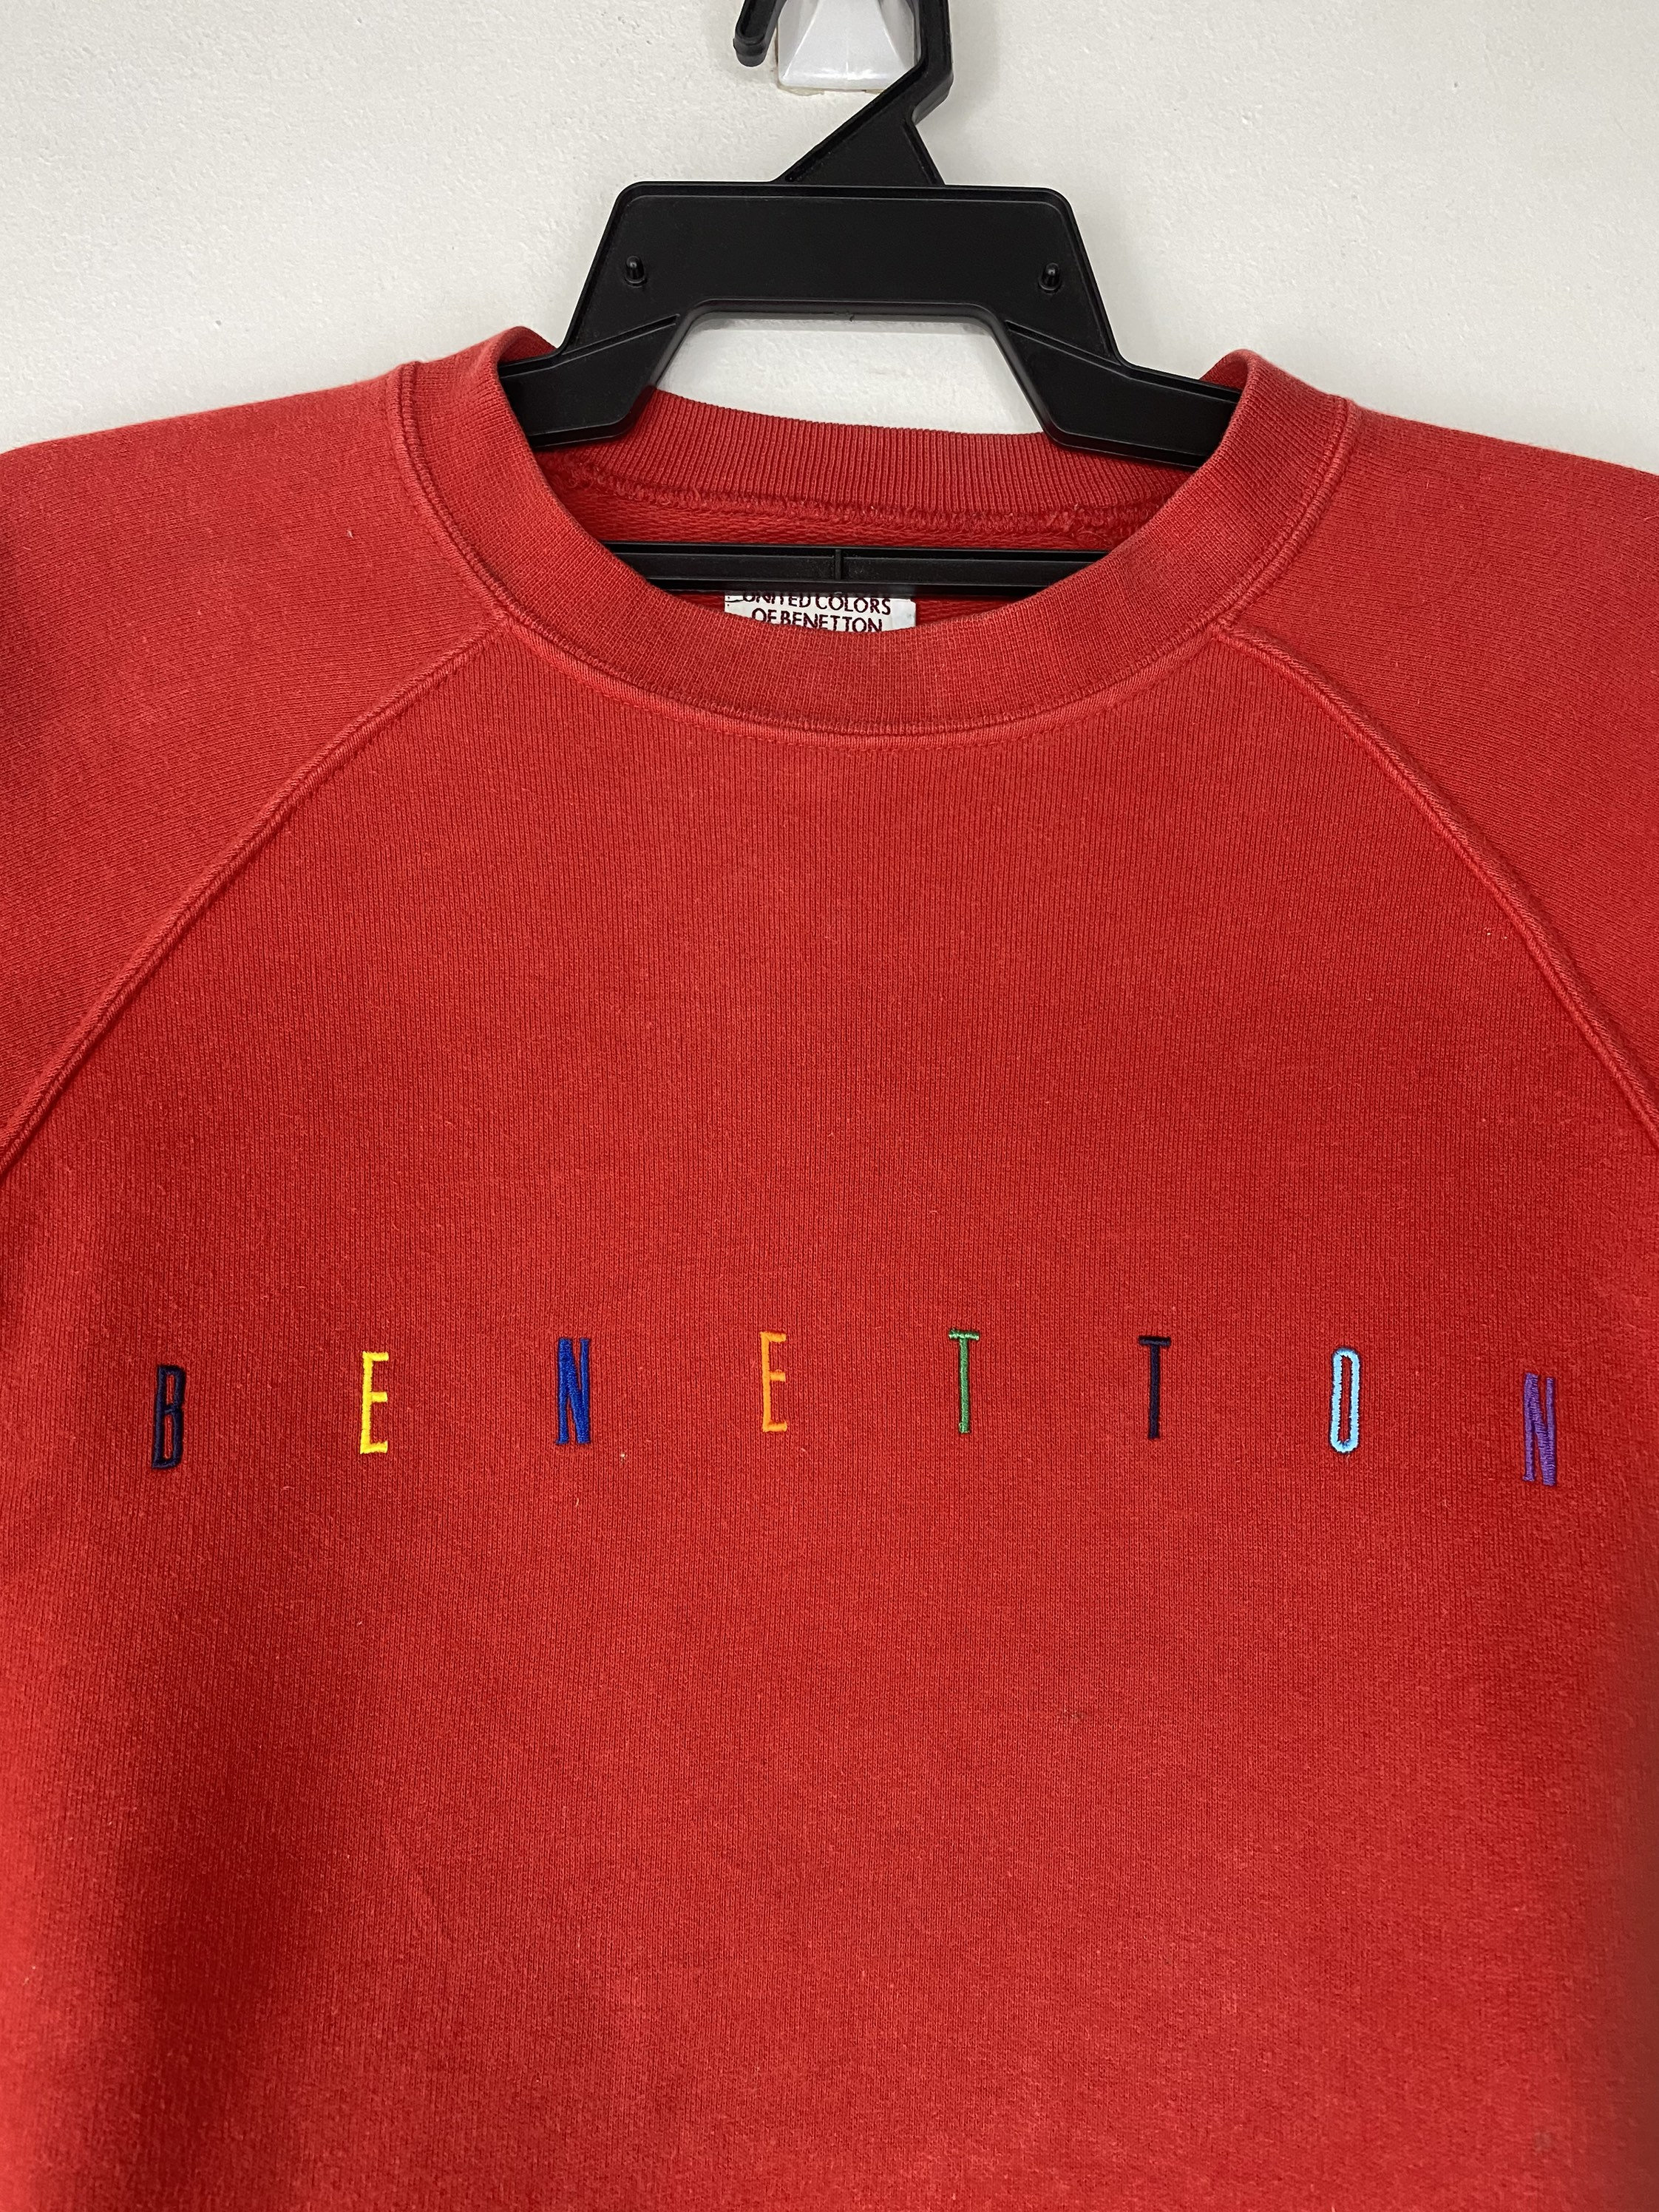 Vintage 90s United Colour of Benetton sweatshirt jumper | Etsy